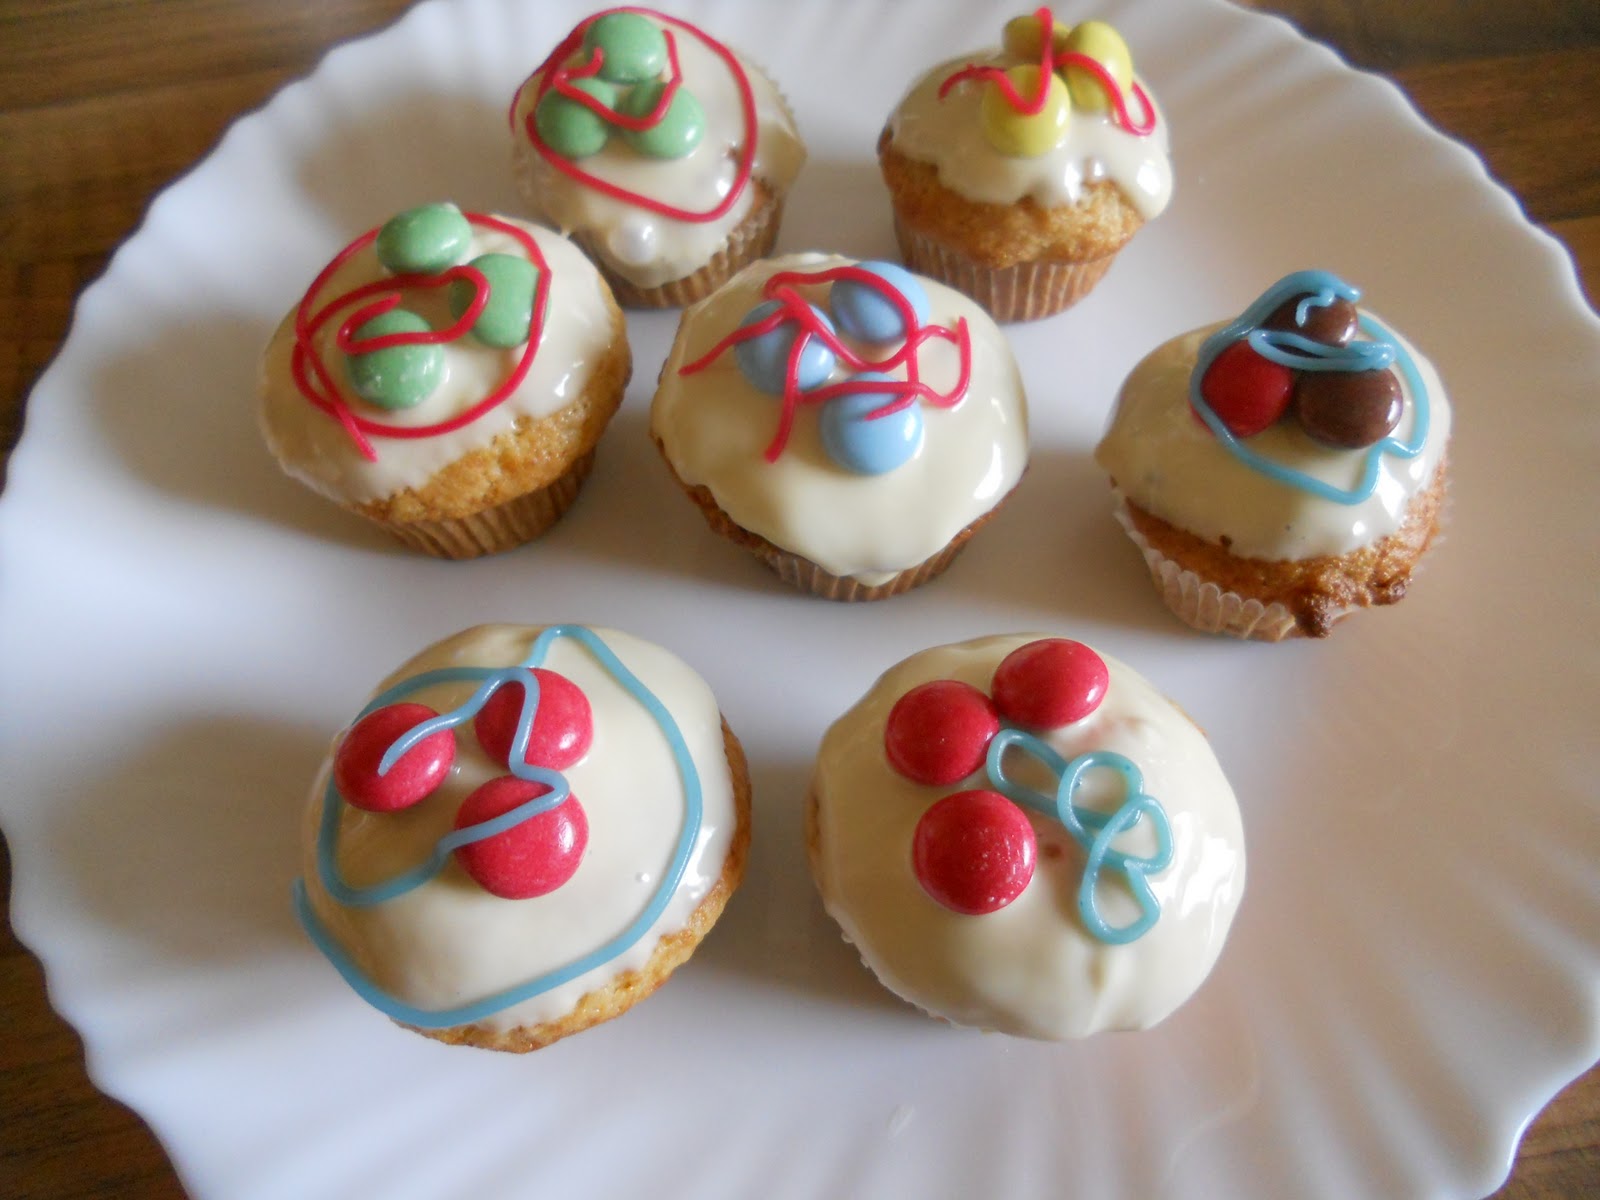 kreatív konyha: Citromos muffin - mini muffin formában sütve